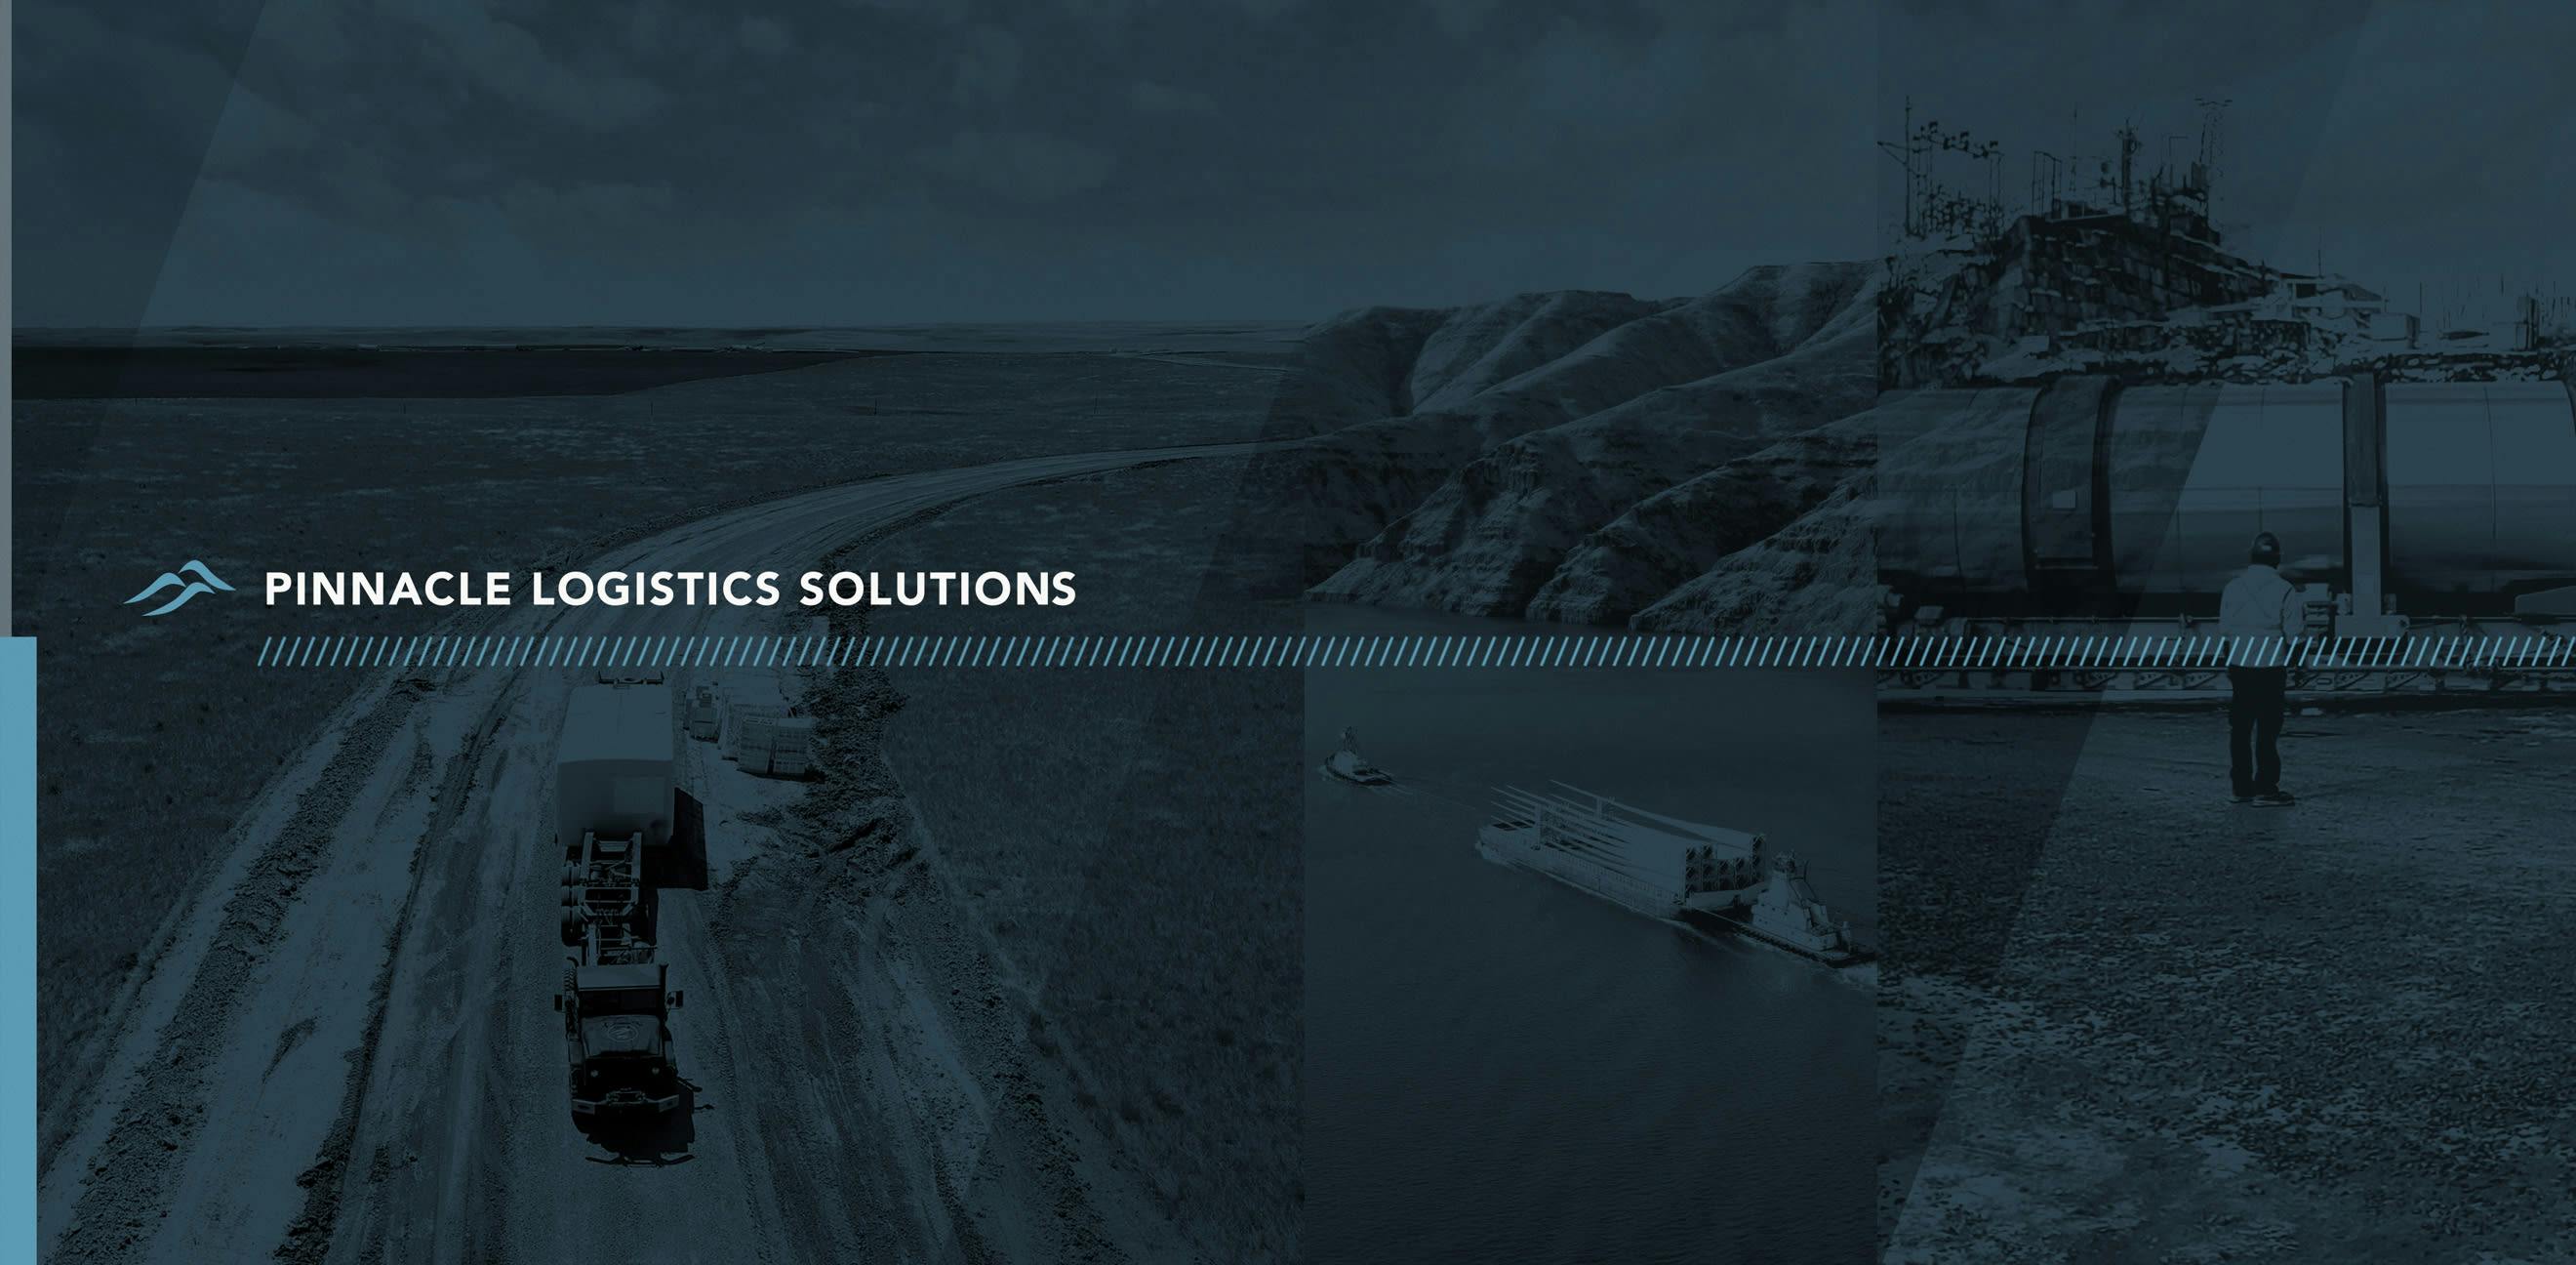 Pinnacle Logistics Solutions